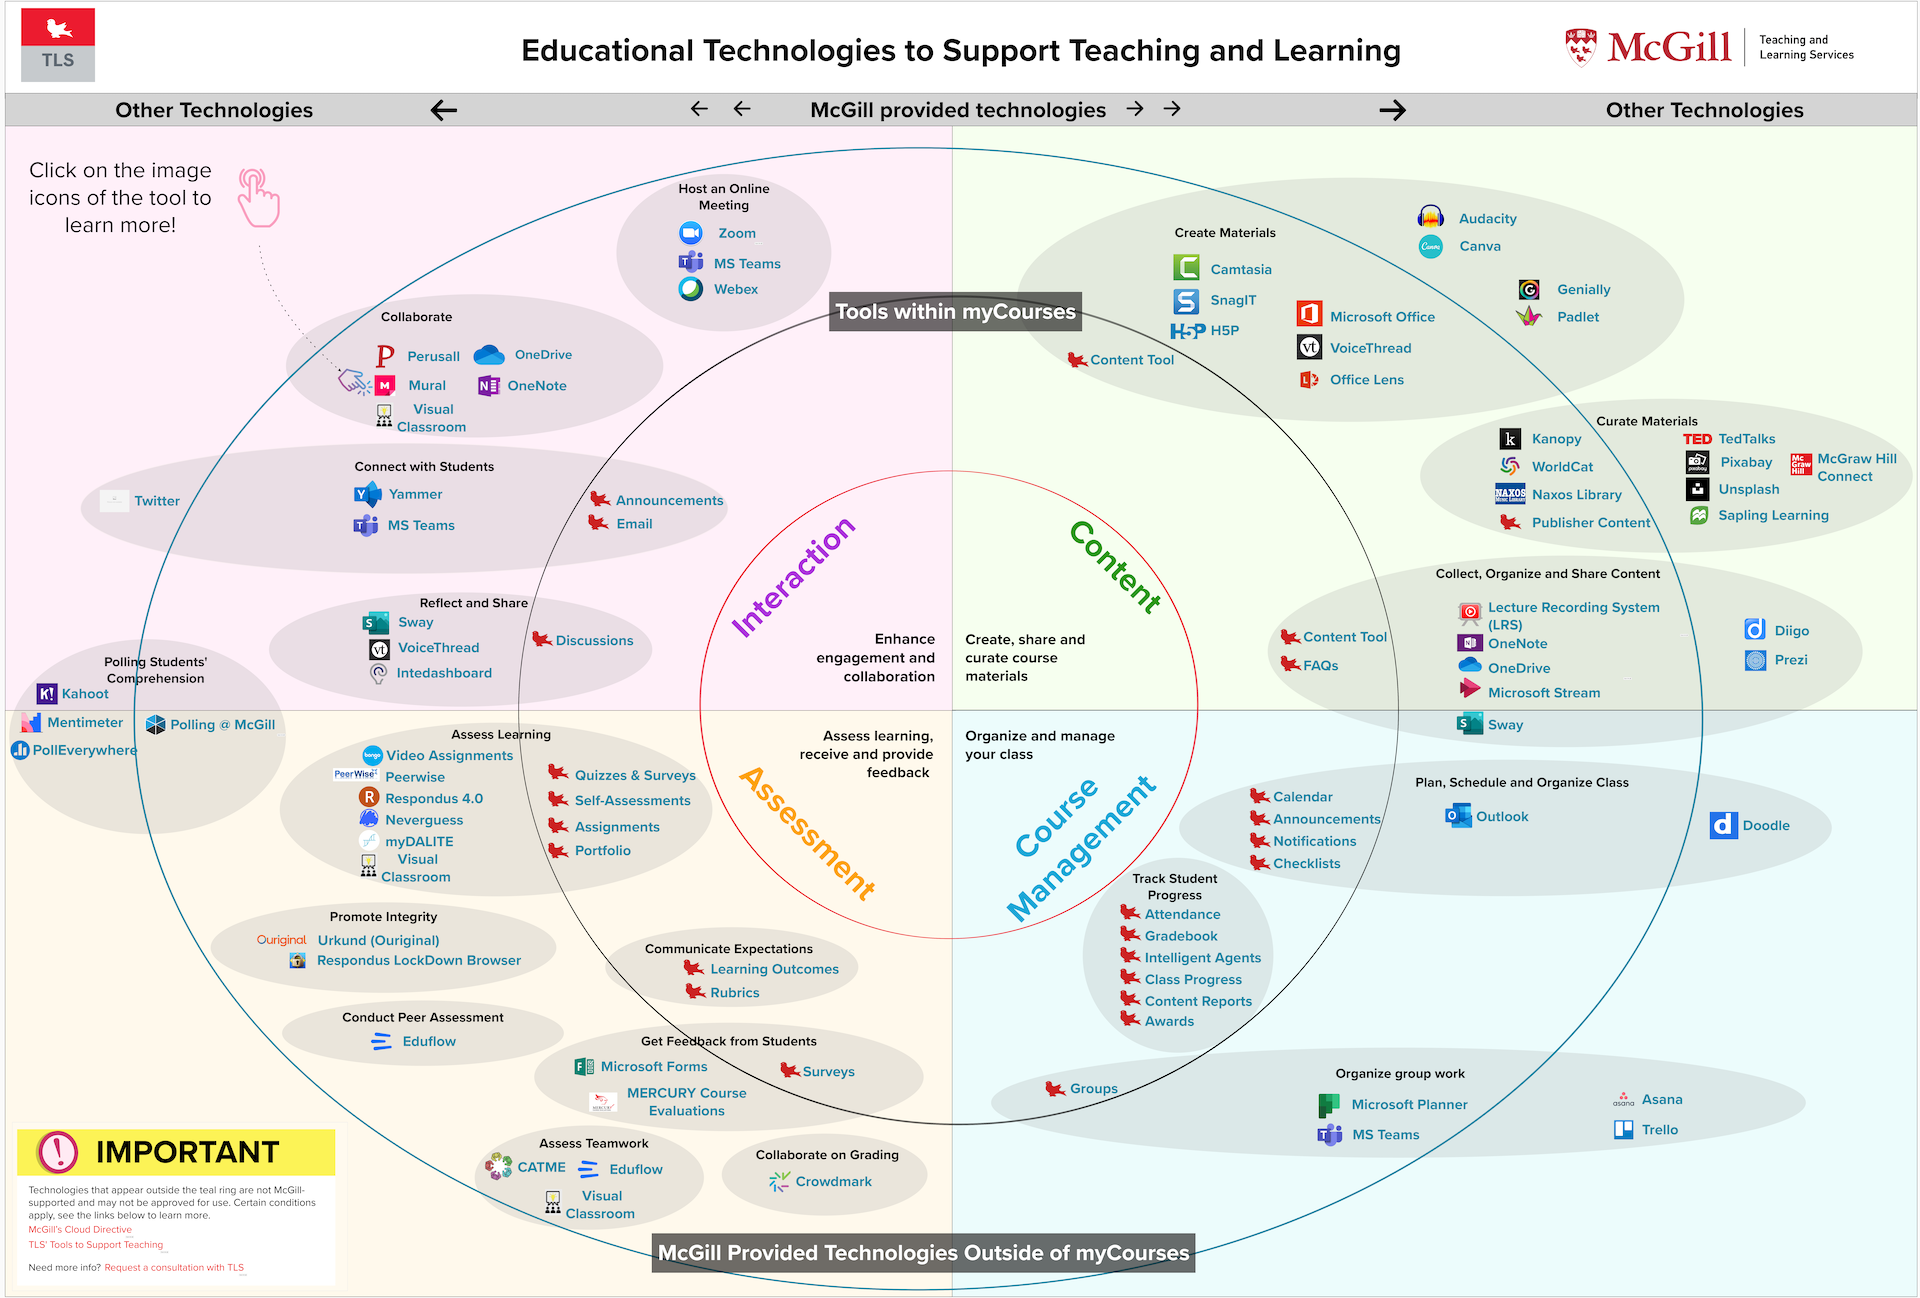 Educational Technologies Ecosystem at McGill University